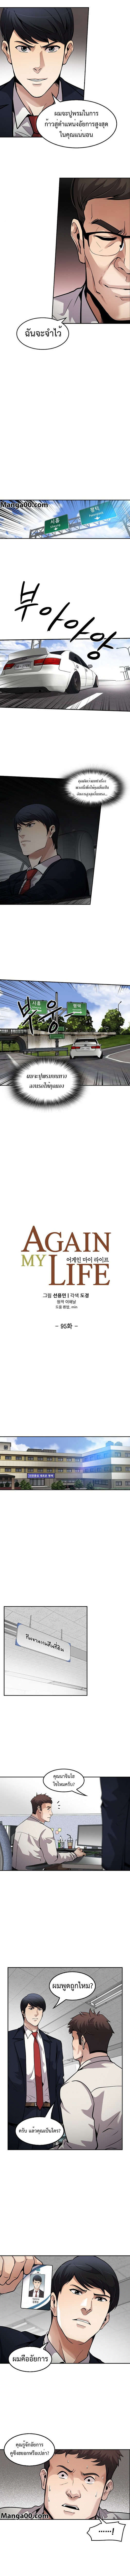 Again My Life 95 (2)